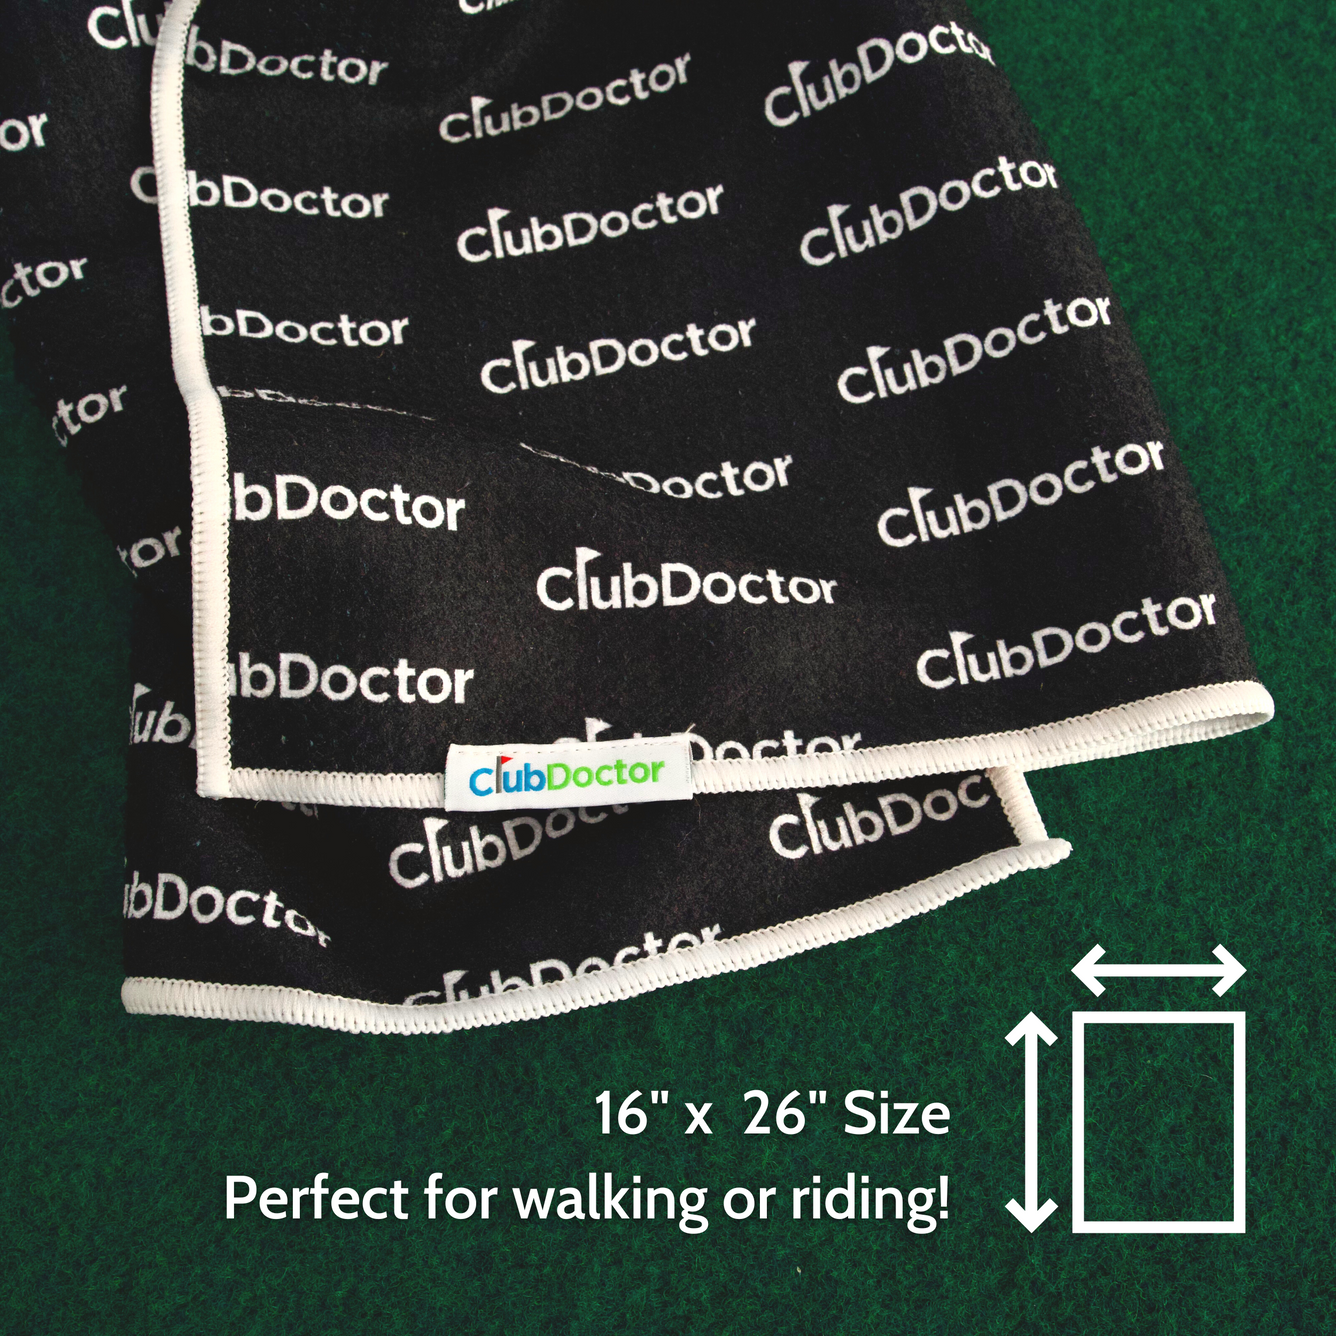 Club Doctor - Premium Golf Towel